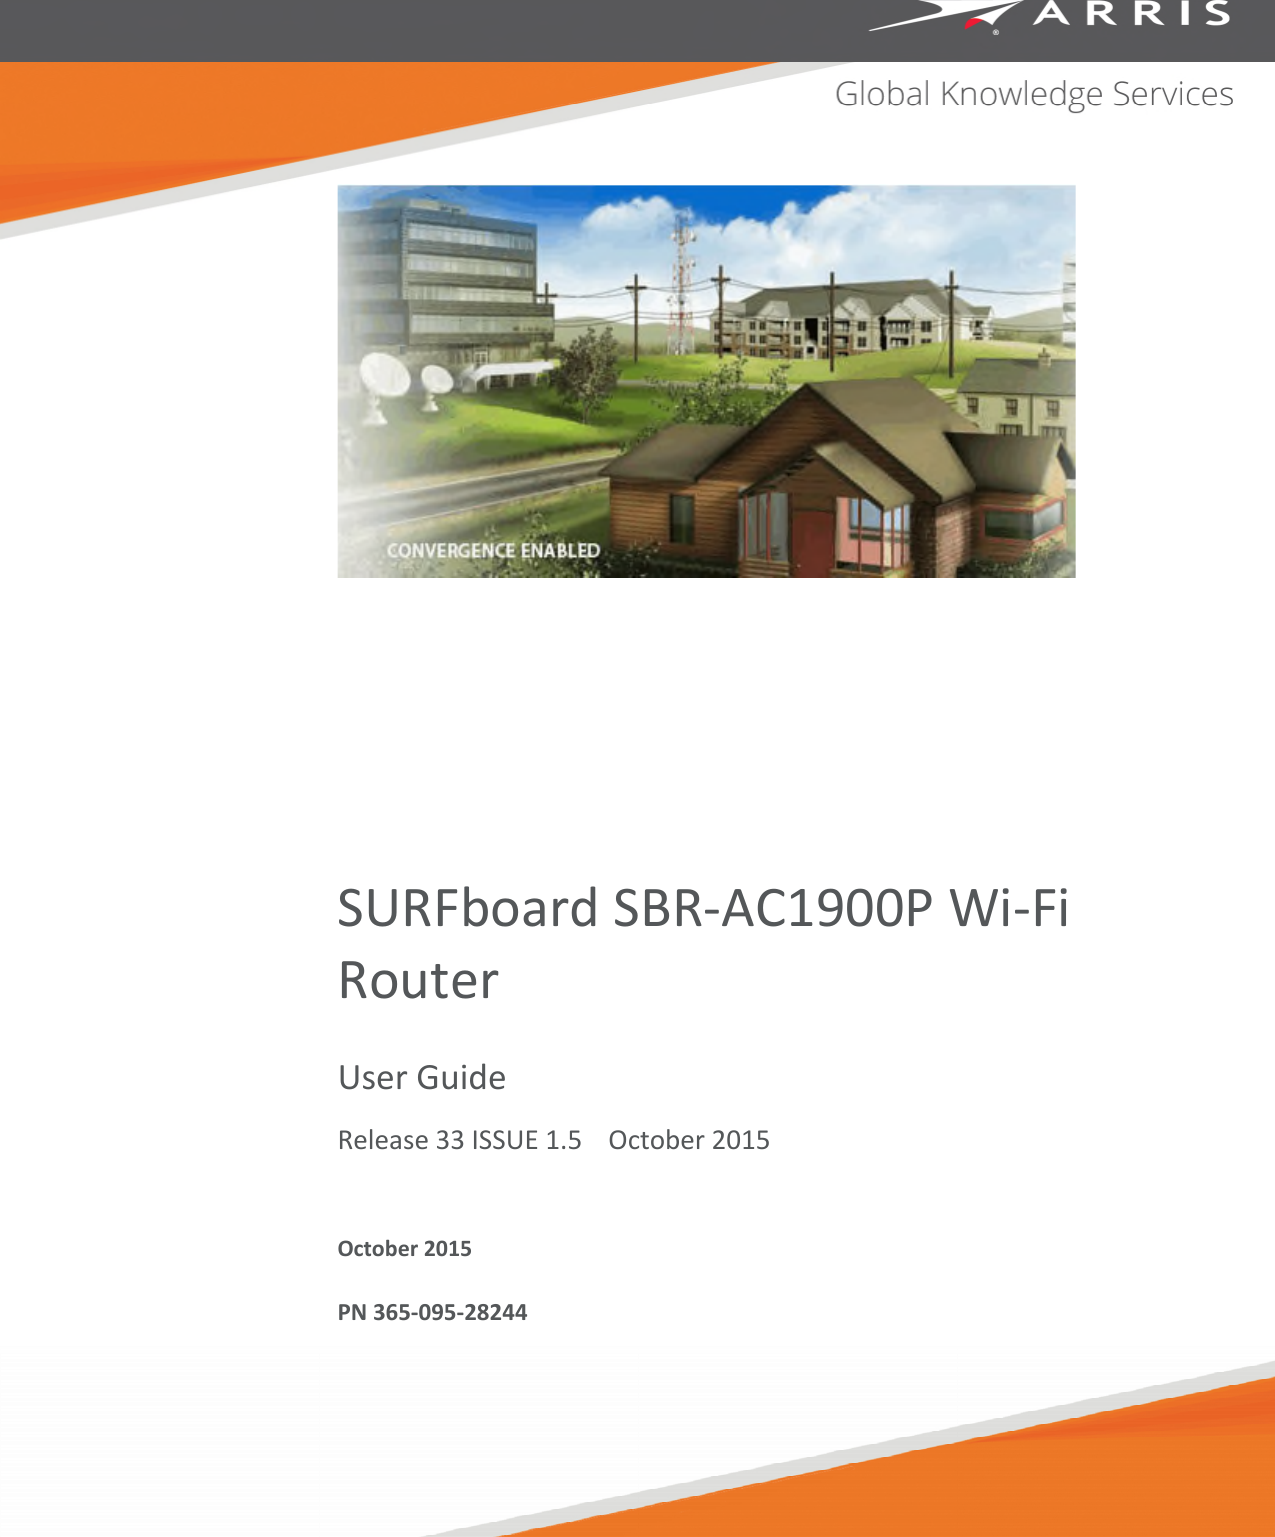 SURFboard SBR-AC1900P Wi-FiRouterUser GuidePN 365-095-28244Release 33 ISSUE 1.5 October 2015October 2015